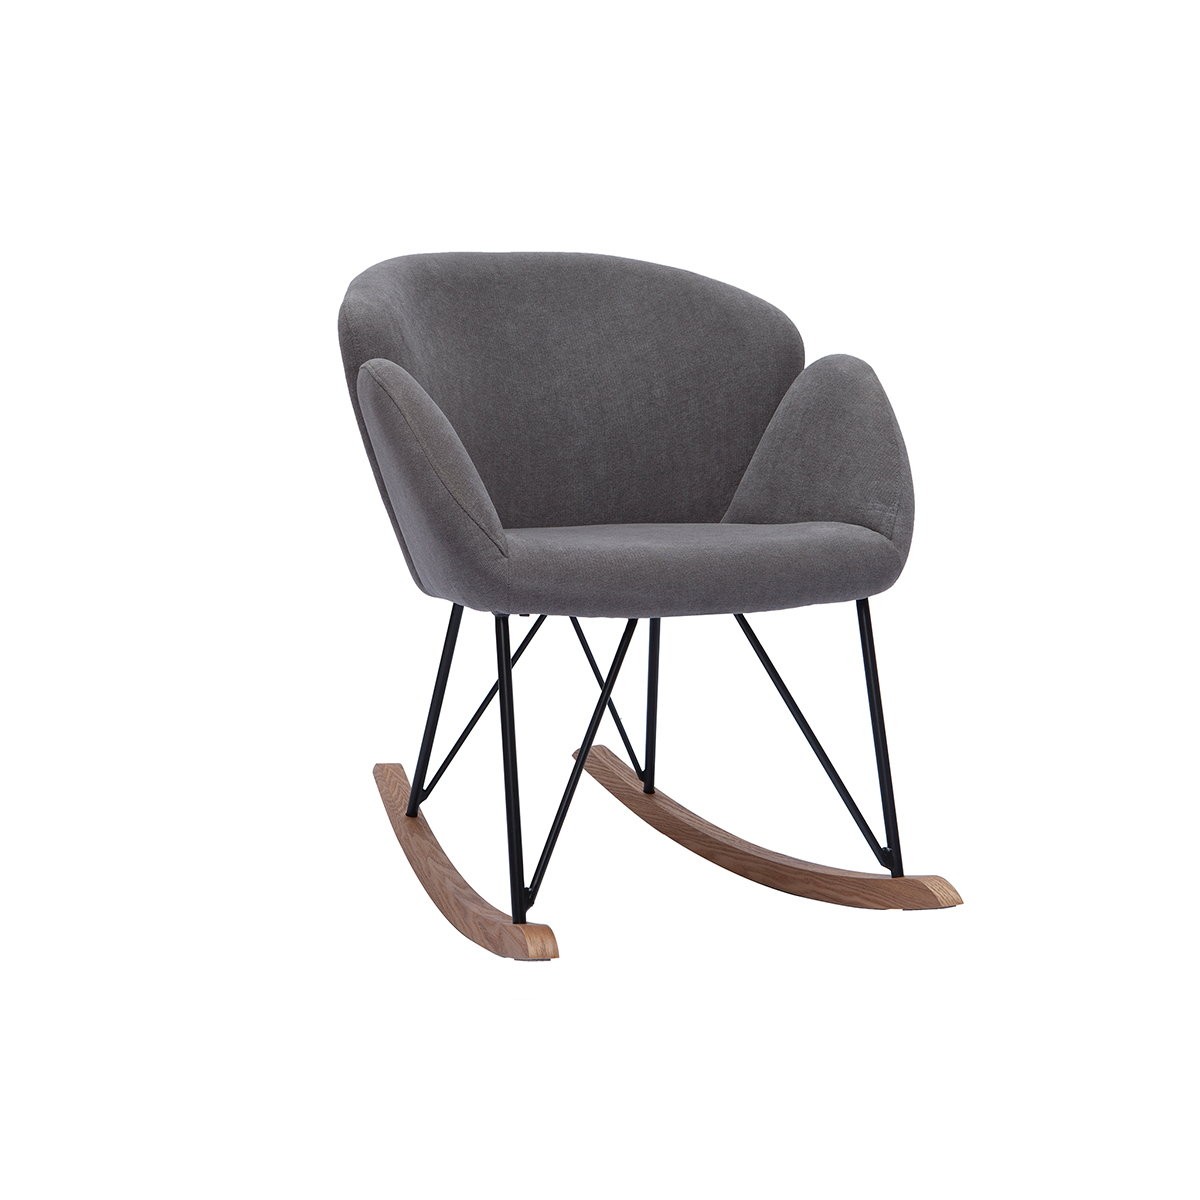 Rocking chair design effet velours gris RHAPSODY vue1